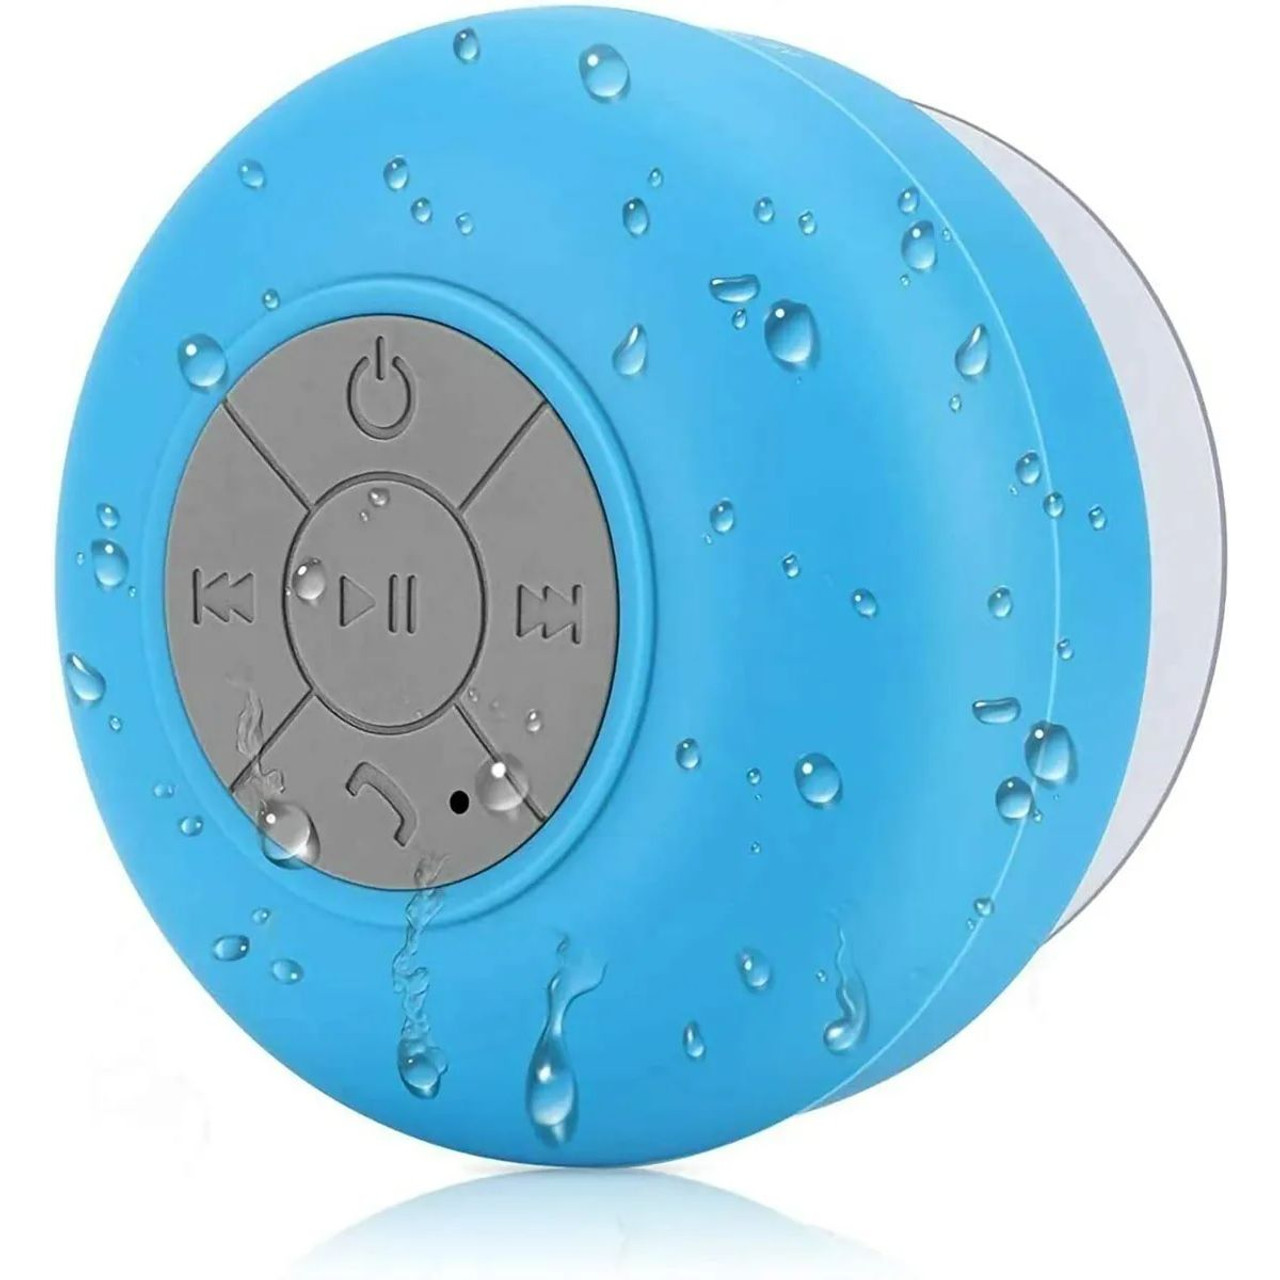 Bluetooth Waterproof Shower Speaker  product image